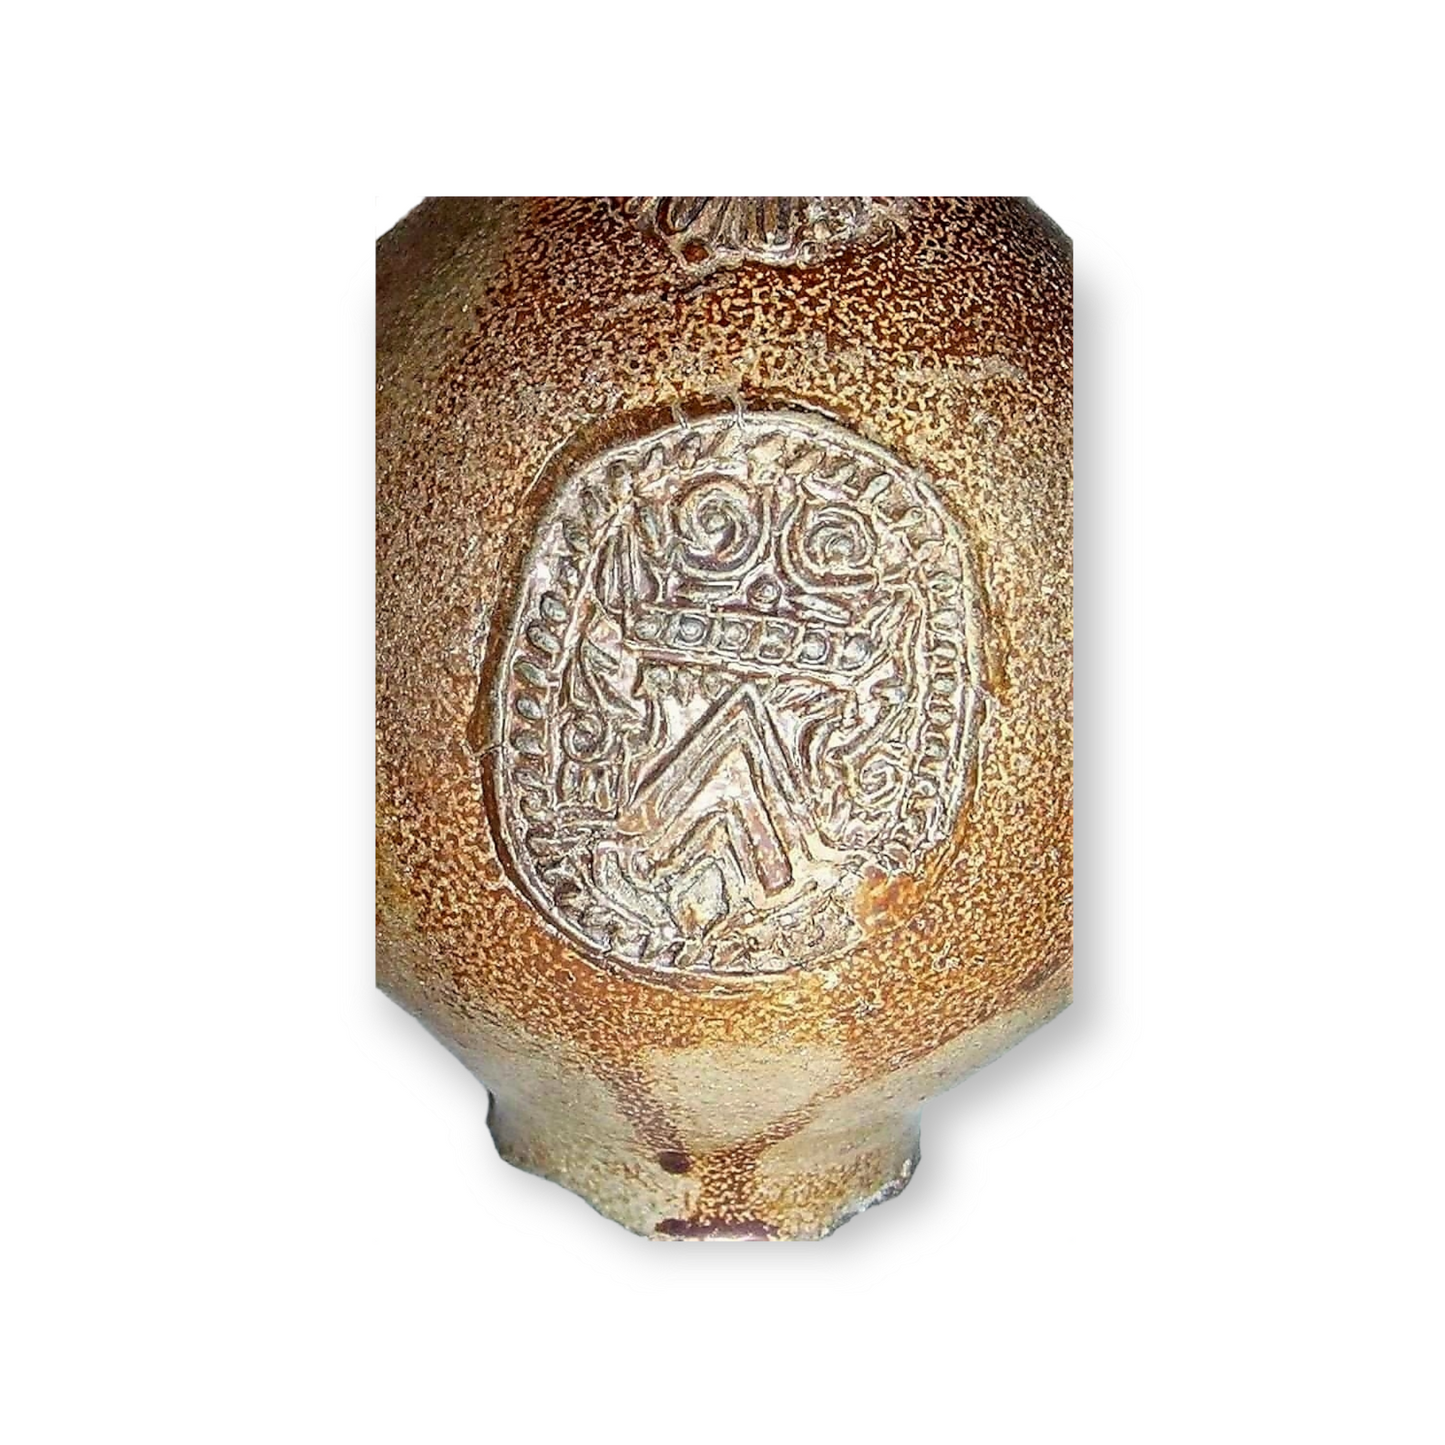 Dredged off the Norfolk Coast, England - A Mid-17th Century German Antique Stoneware Bellarmine Jug or Bartmannkrug